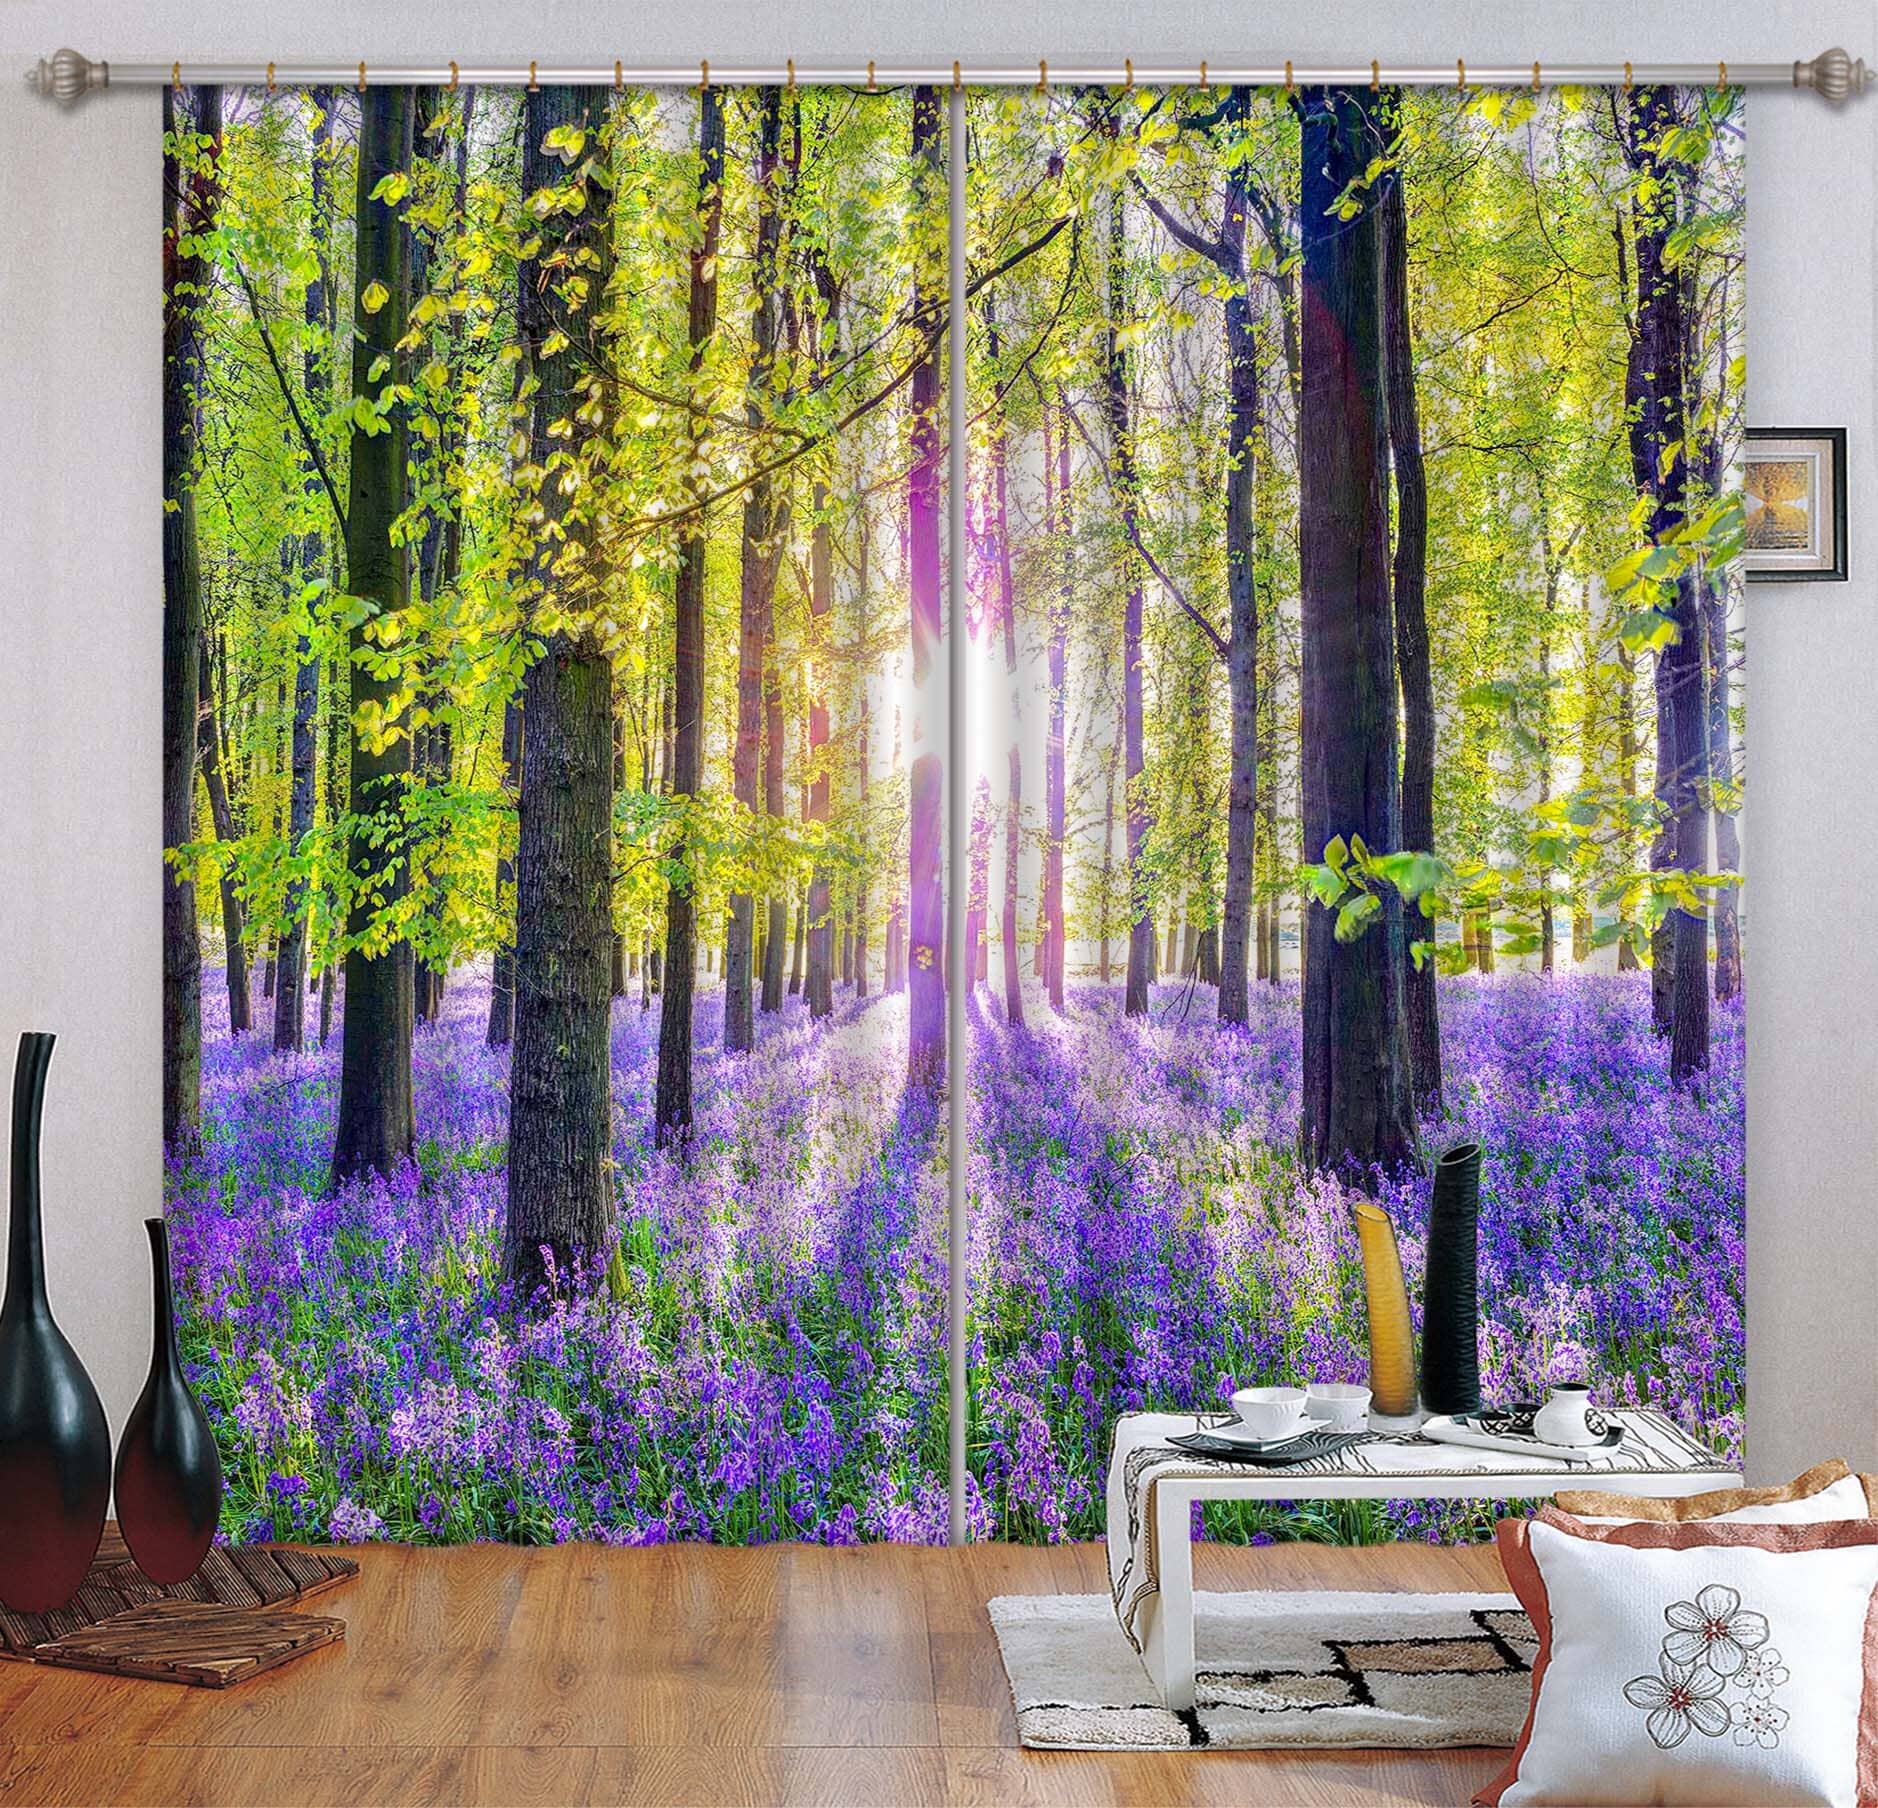 3D Purple Ocean 017 Assaf Frank Curtain Curtains Drapes Curtains AJ Creativity Home 